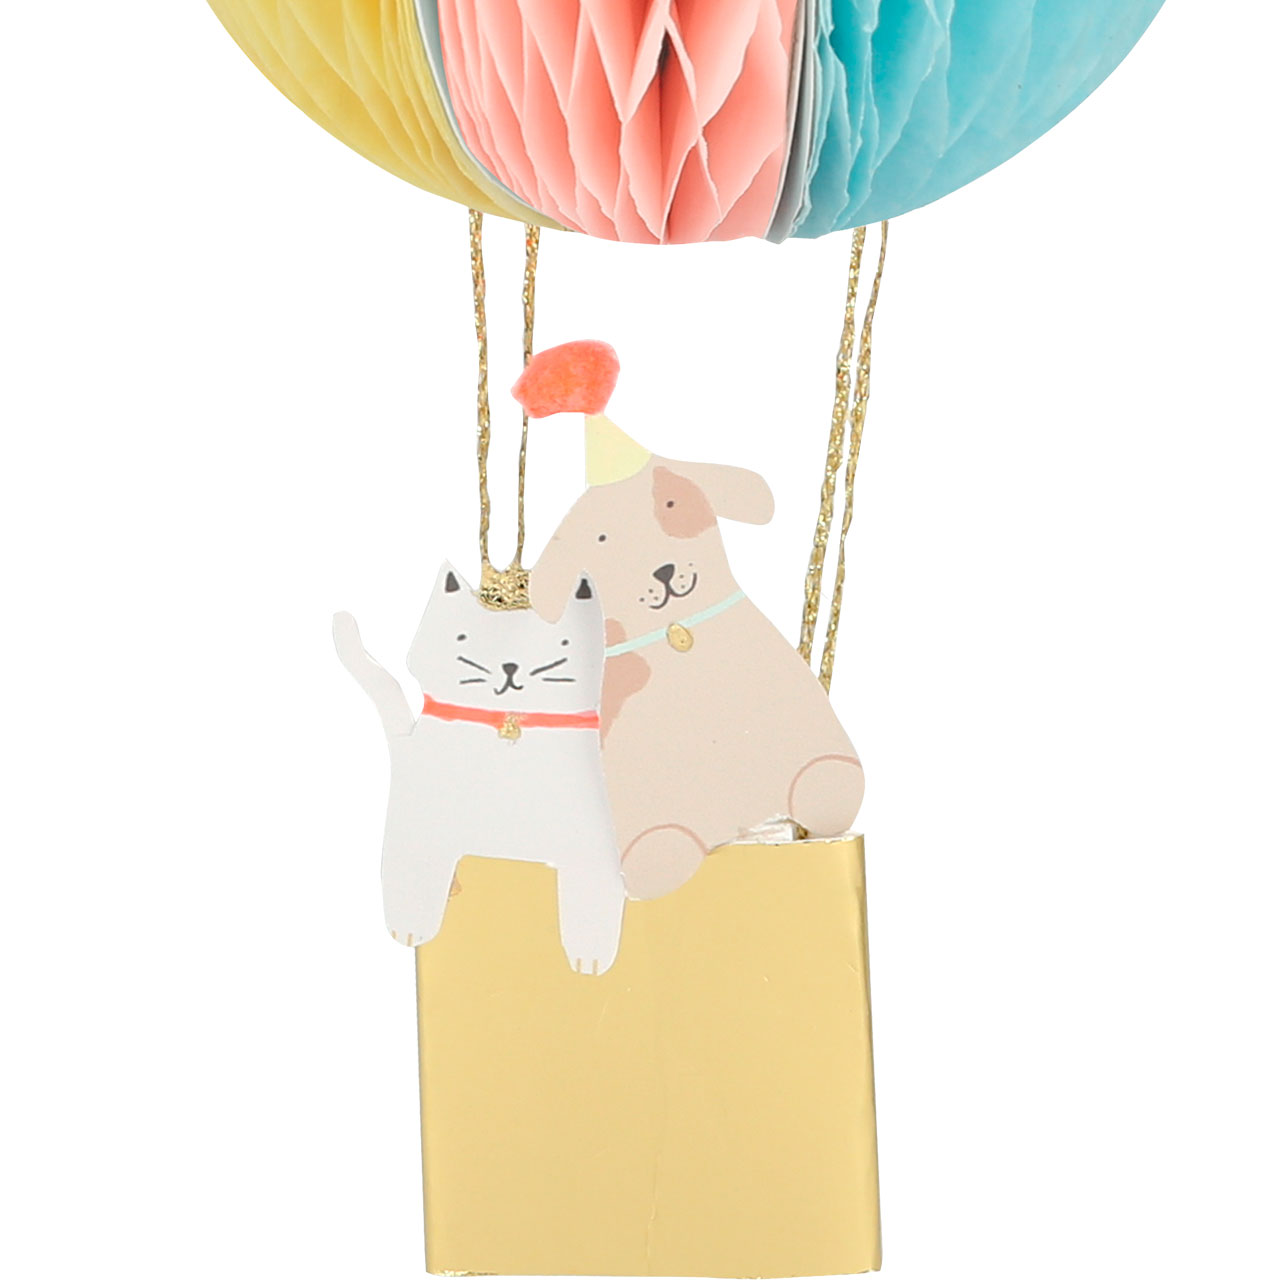 Geburtstagskarte - Heißluftballon